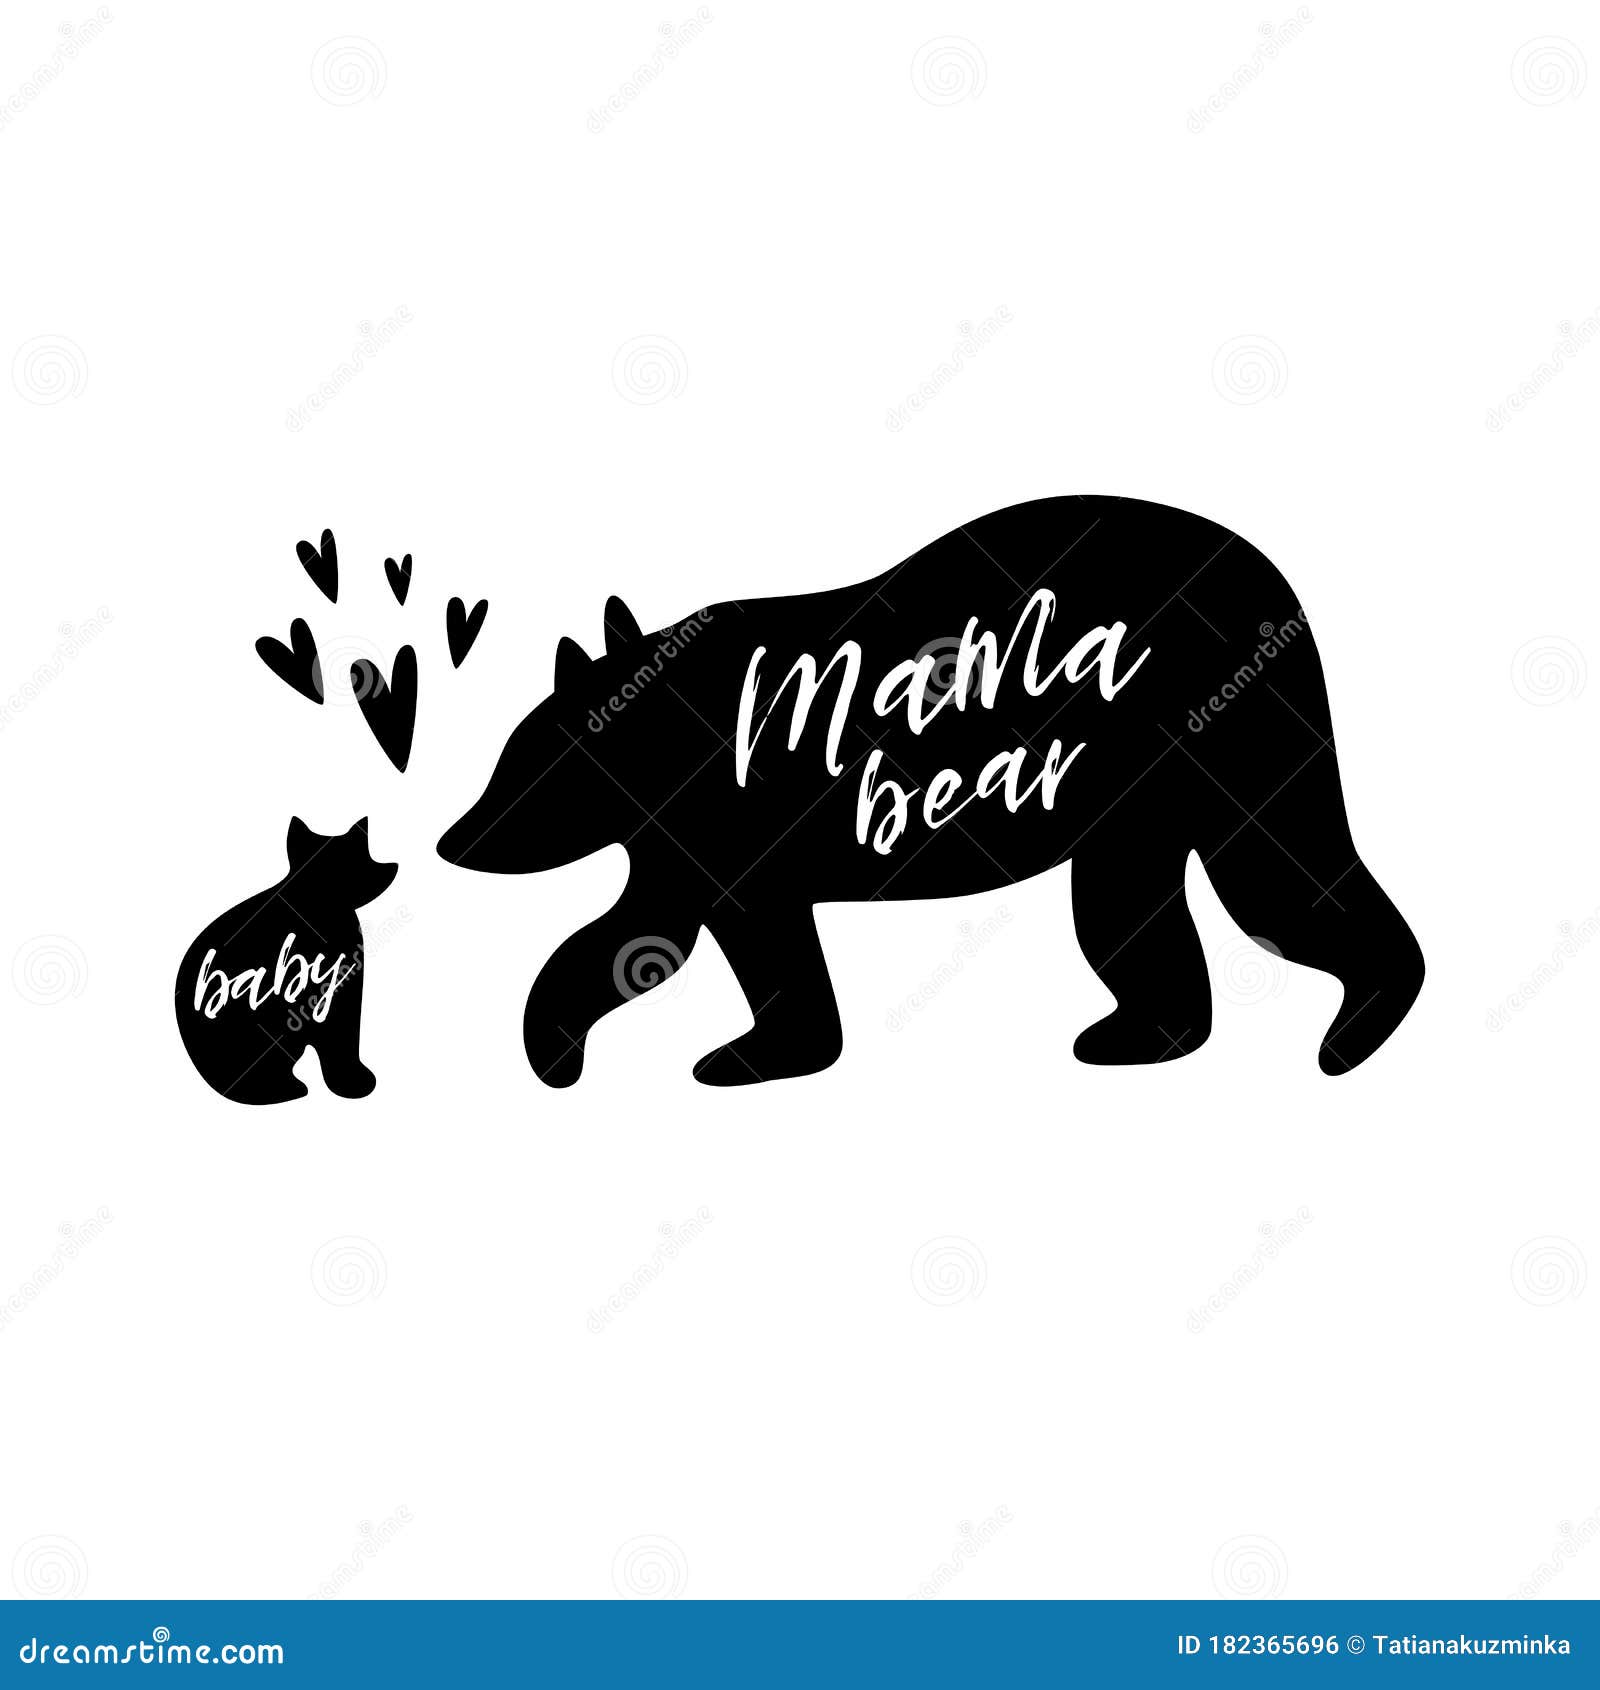 Brother Bear Mama Bear Bear Bear SVG Bundle Bear svg Bear Family Bear Family SVG Daddy Bear Baby Bear Sister Bear